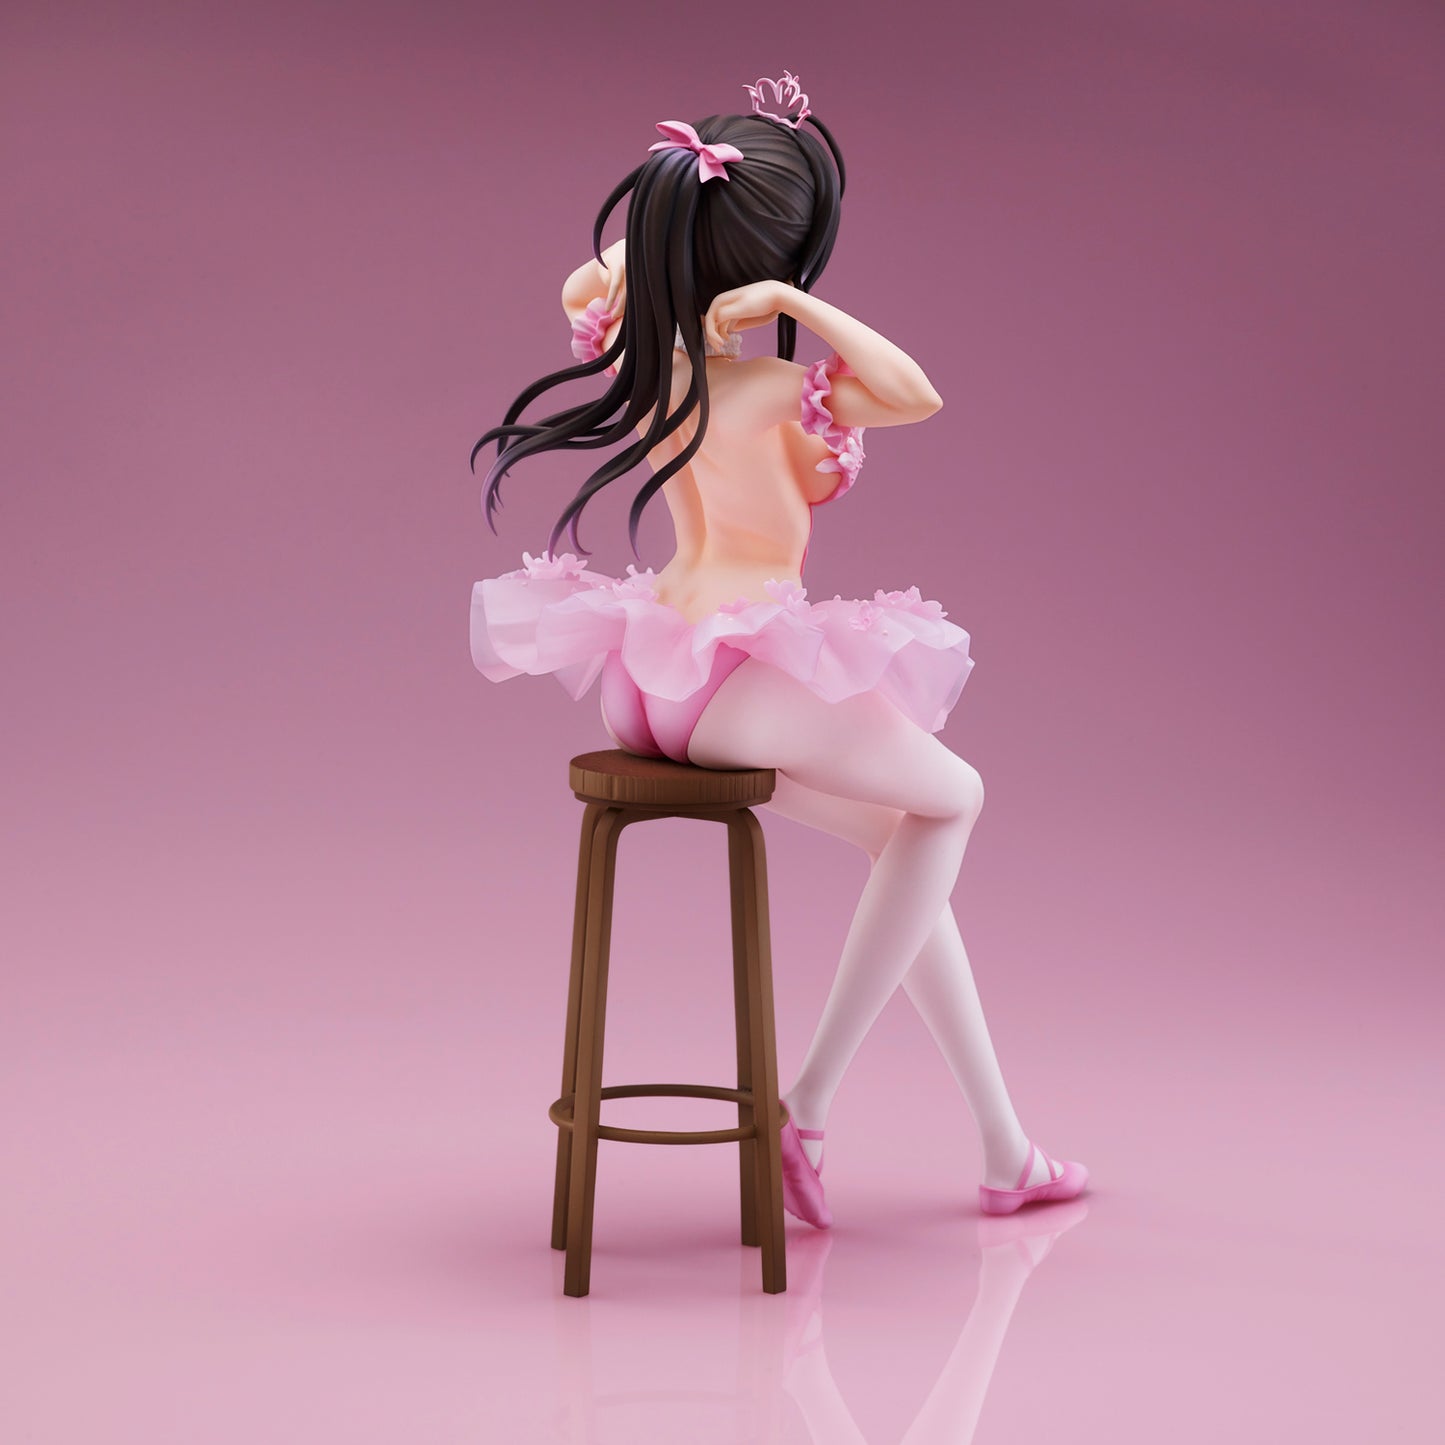 Anmi Illustration Flamingo Ballet Group Ponytail Girl